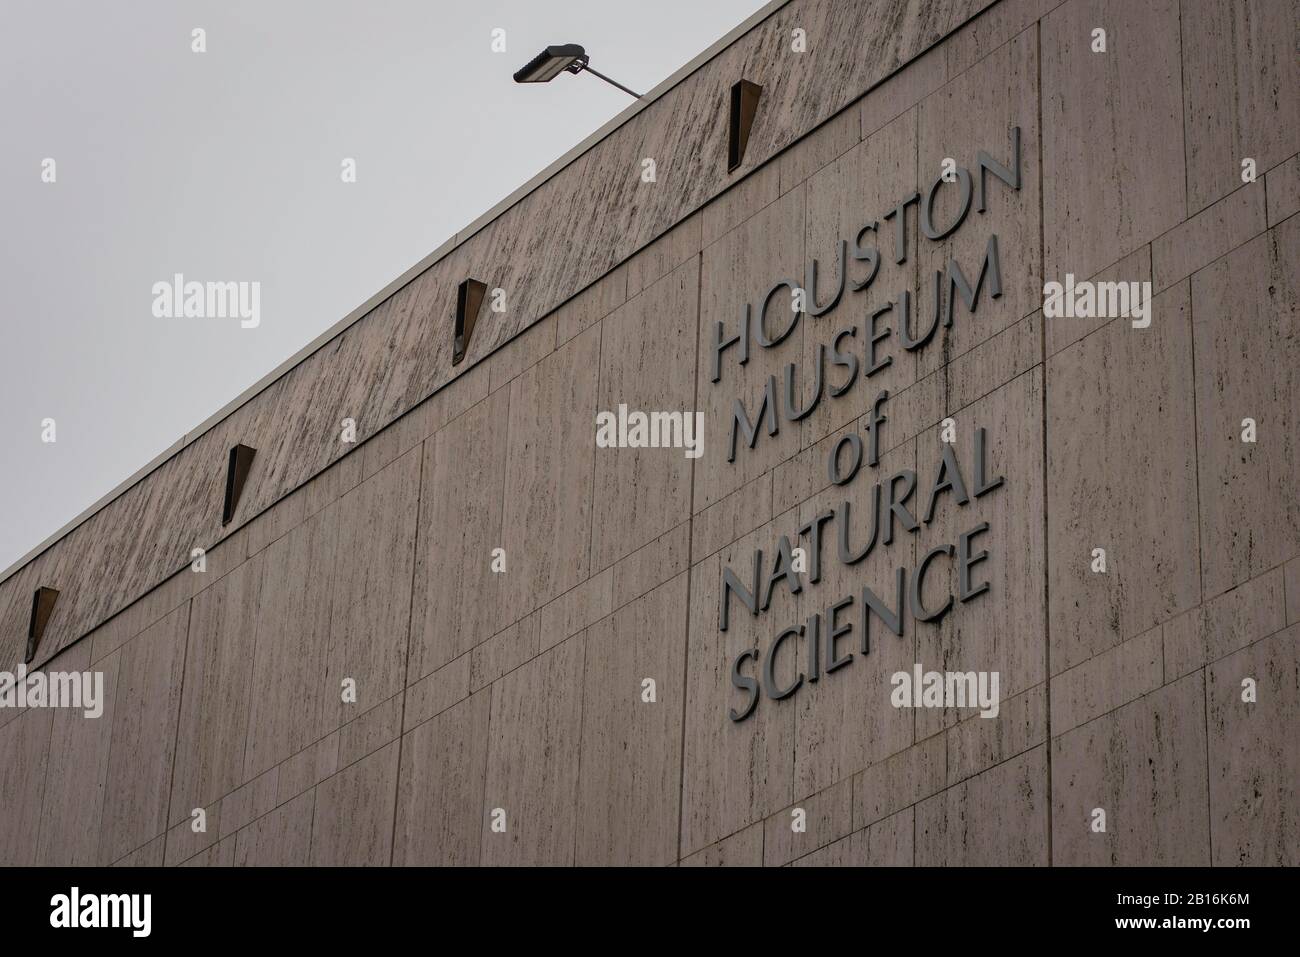 Houston, Texas - February 11, 2020: Houston Museum of Natural Science text on stone facade Stock Photo